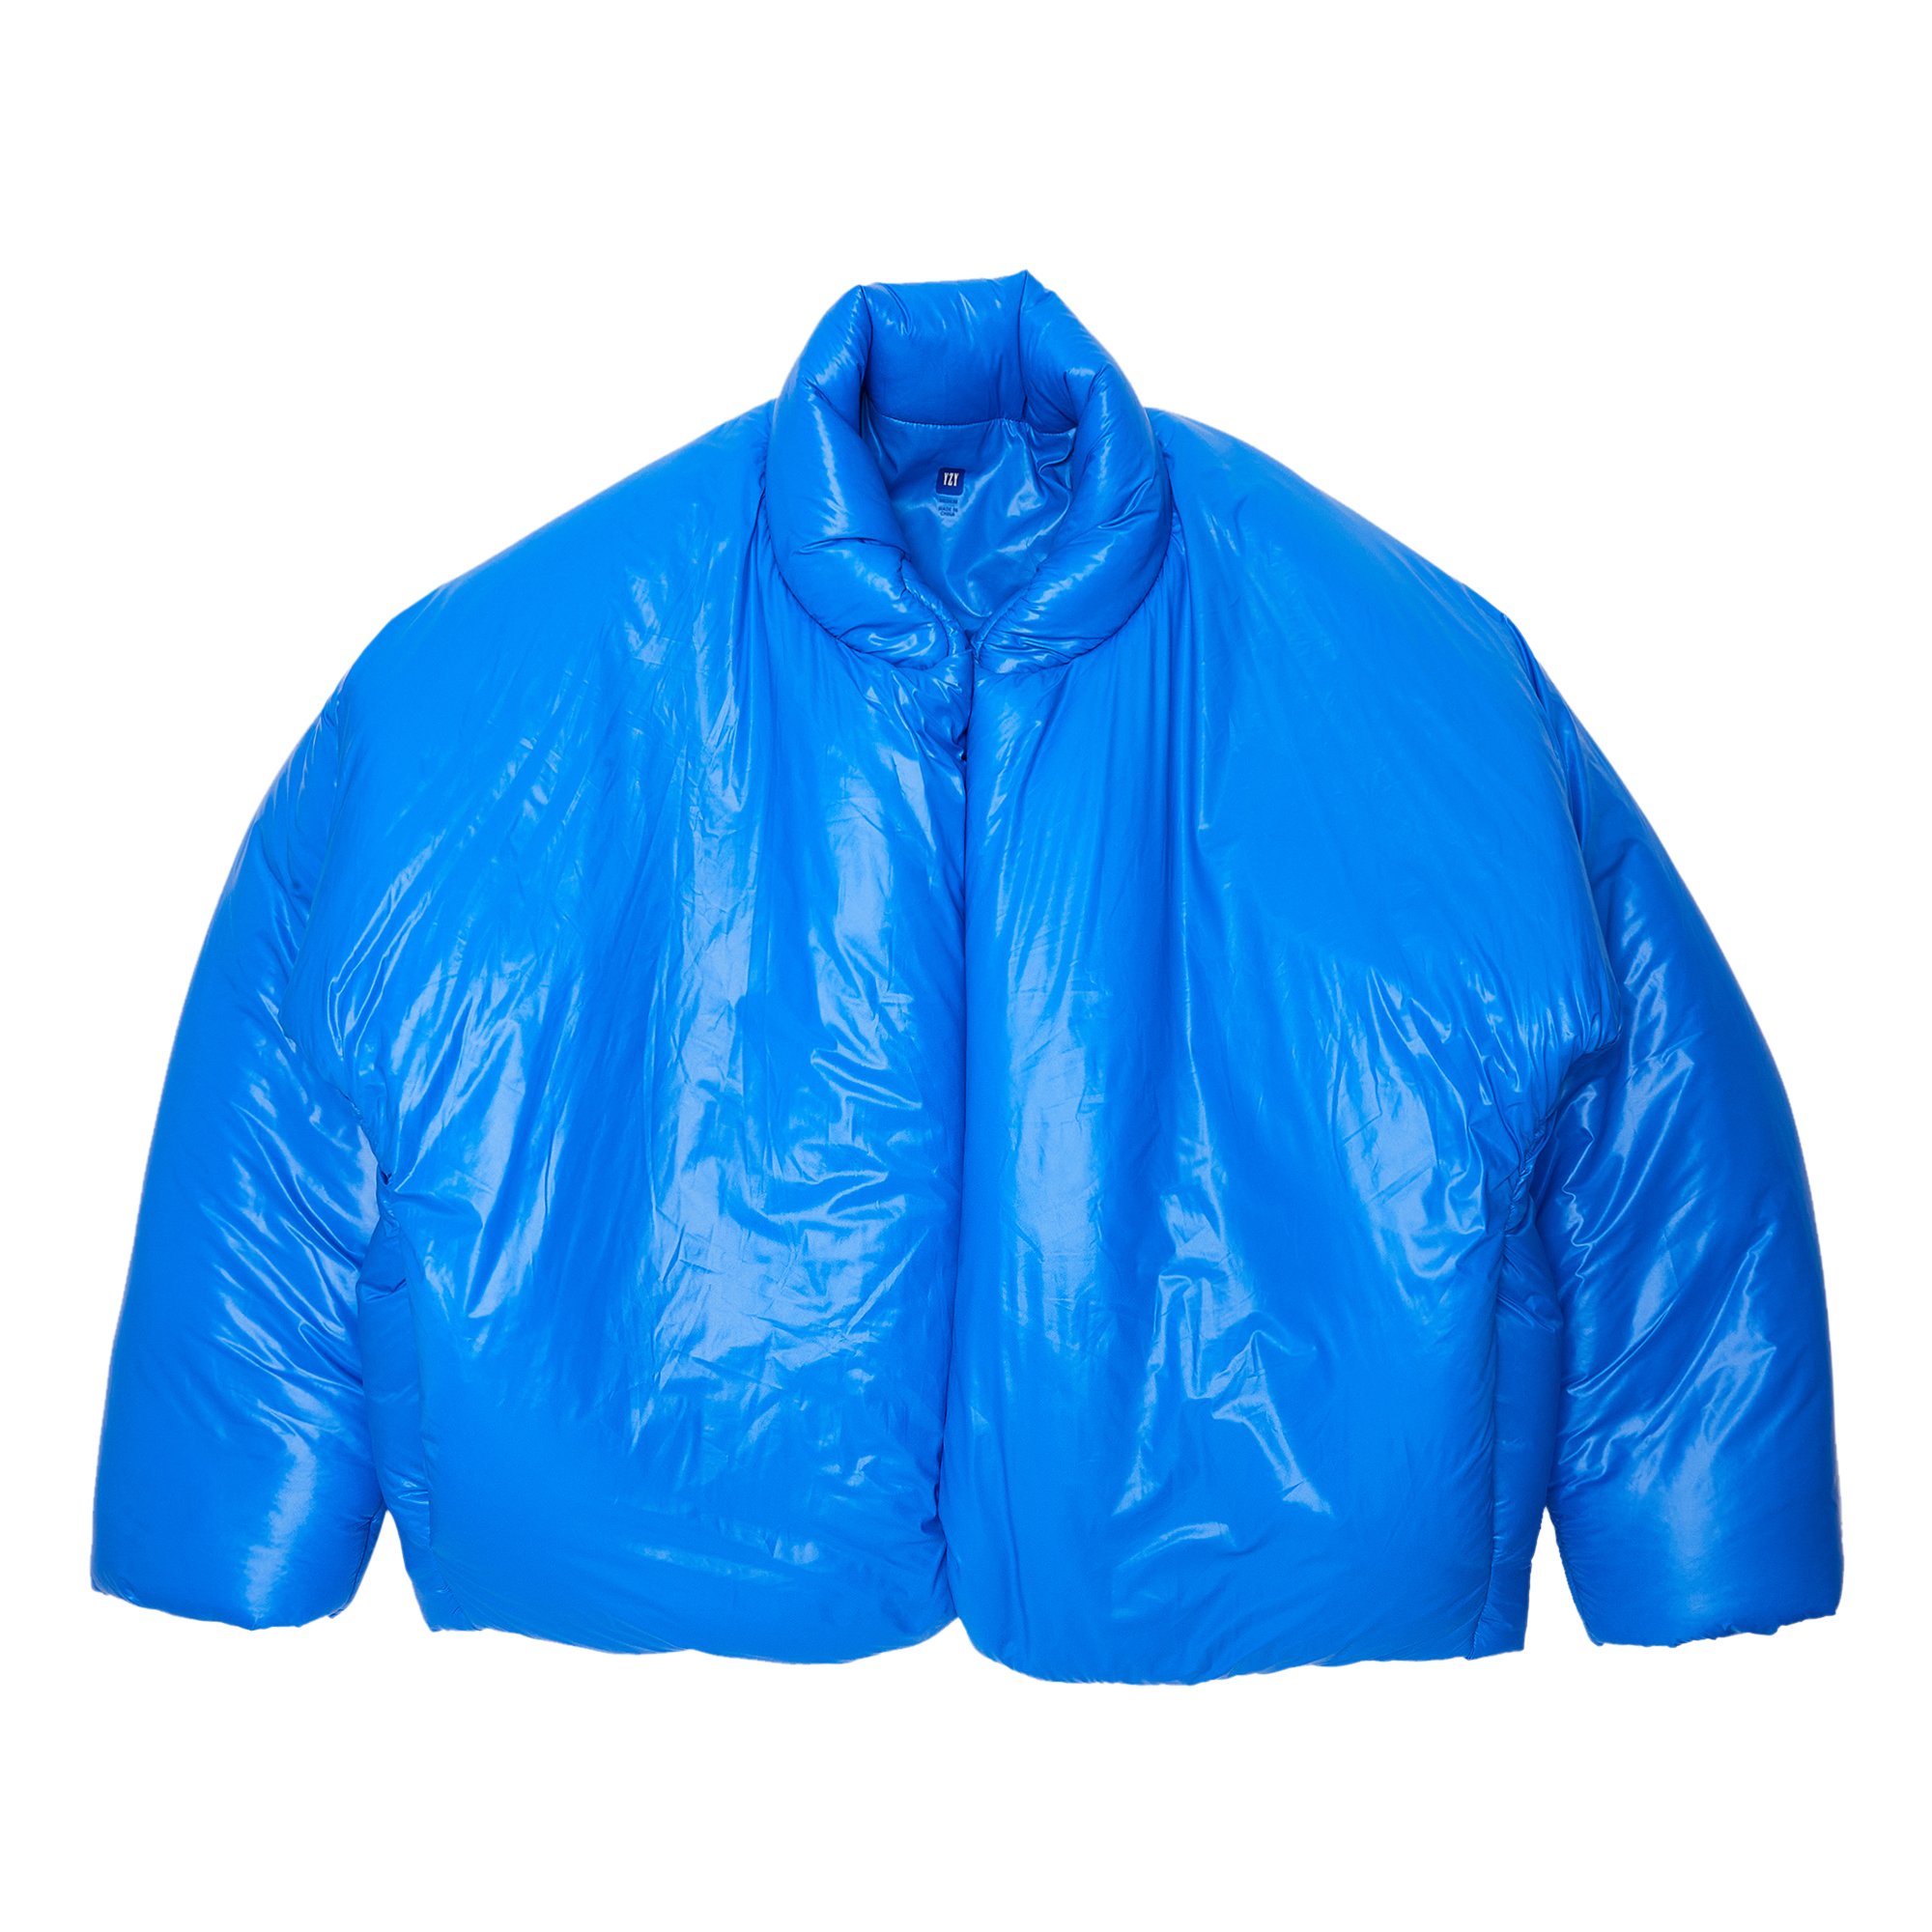 8,880円Yeezy gap round jacket blue